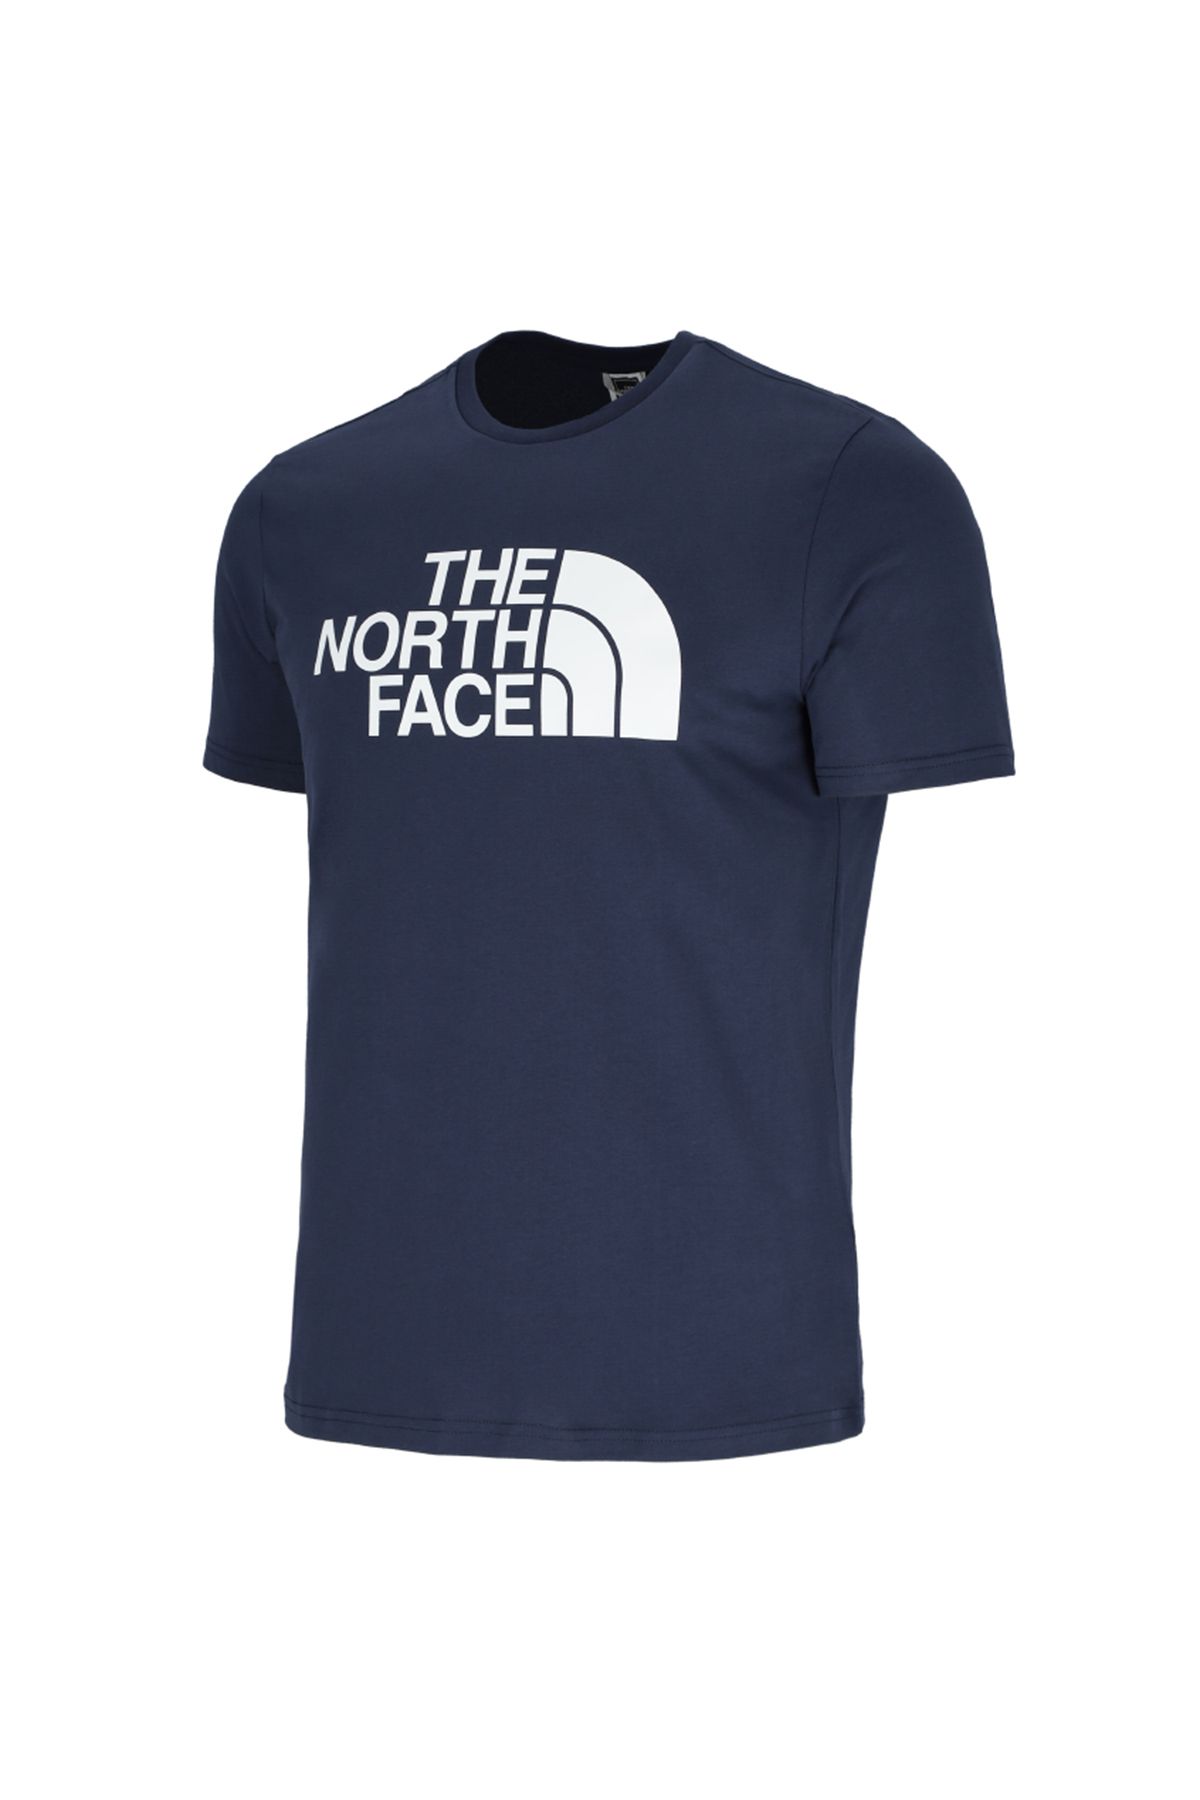 The North Face M S/s Half Dome Erkek Mavi Outdoor T-shirt Nf0a4m8n8k21